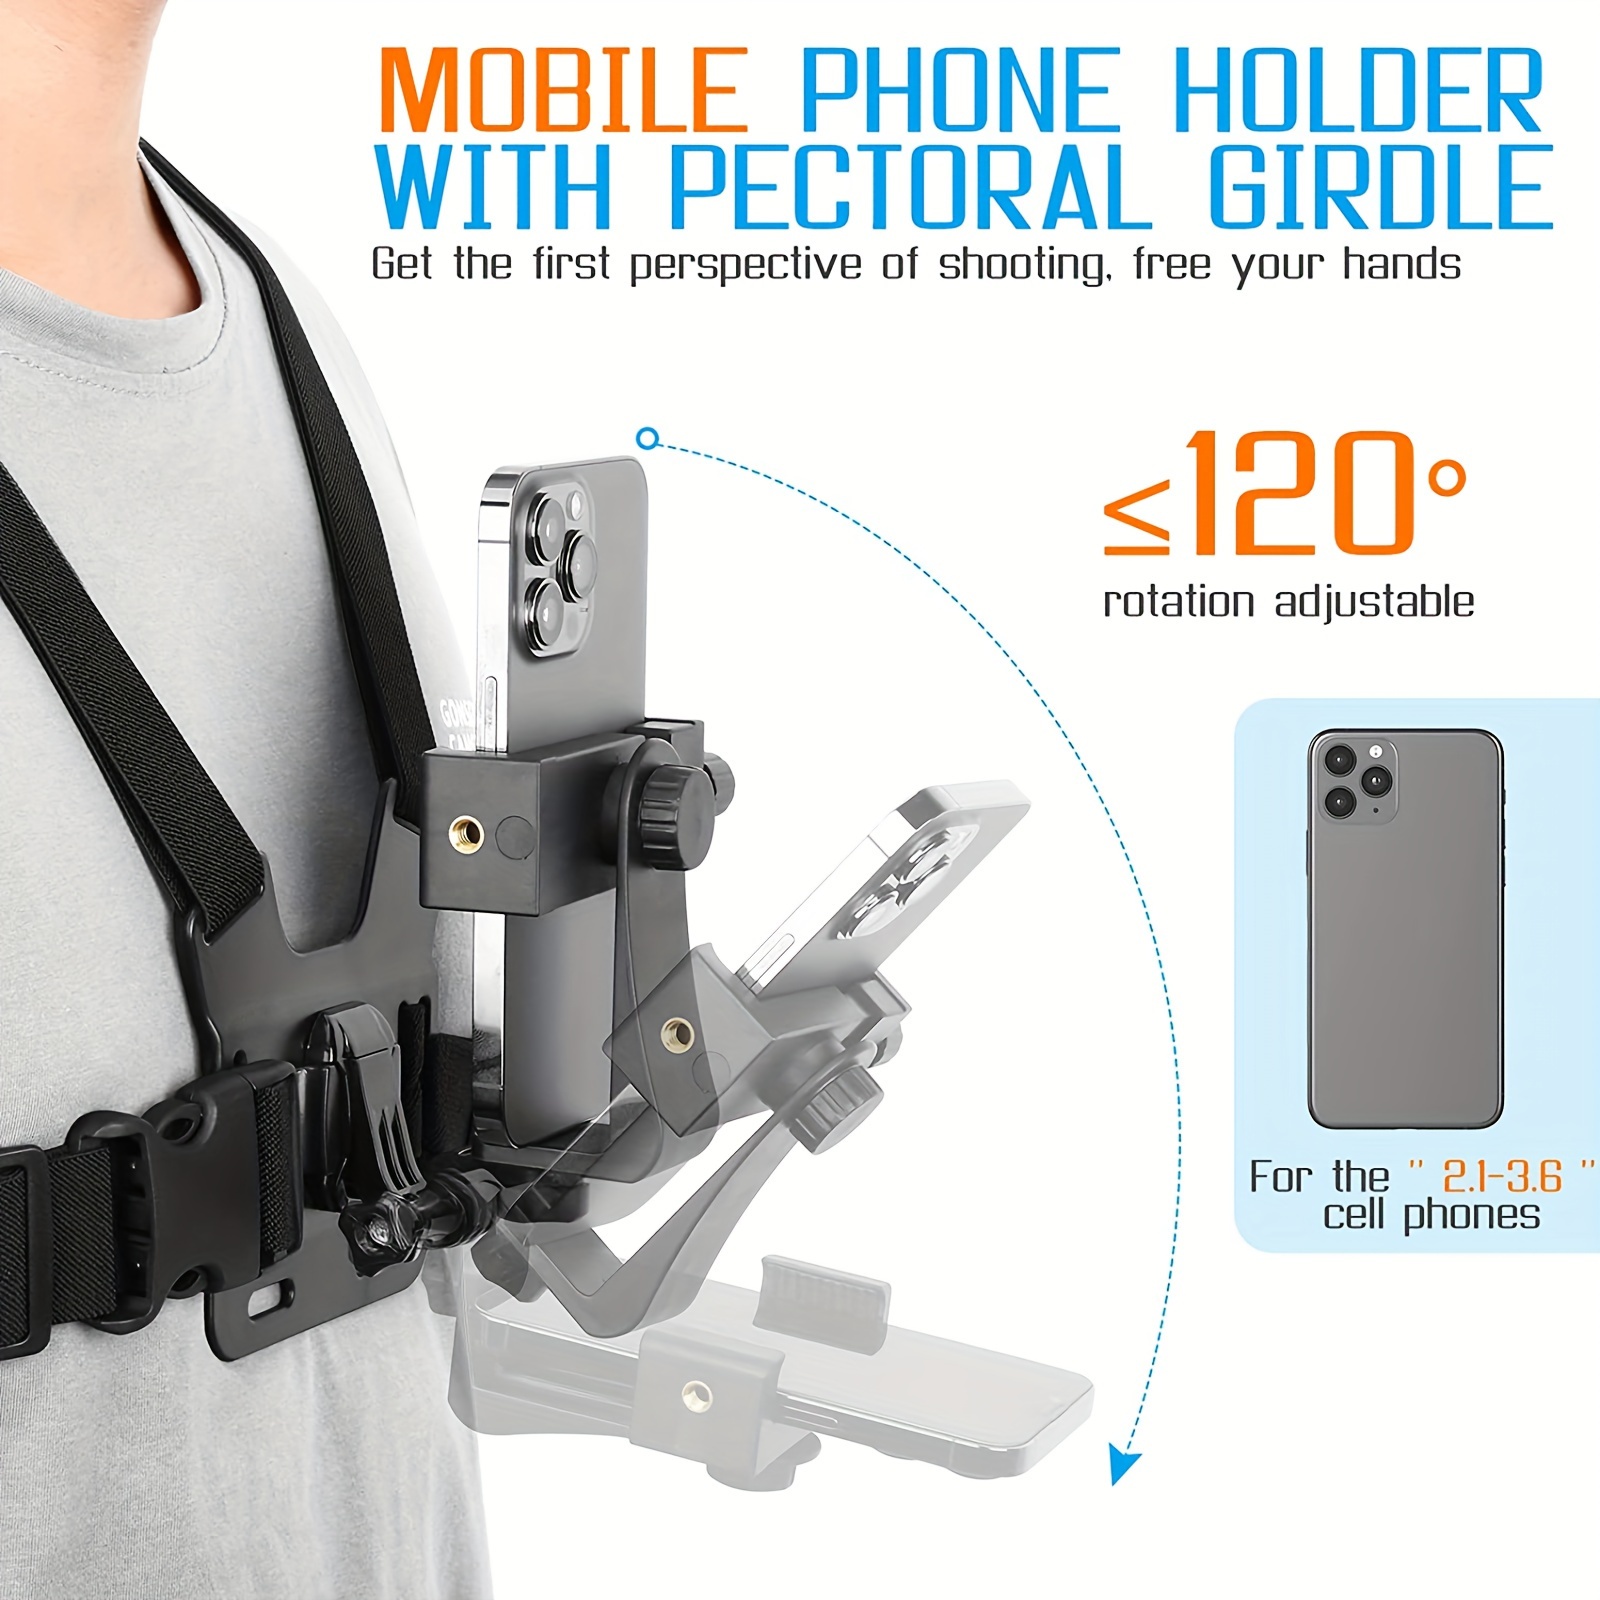 Car Headrest Mount POV Holder Kit for Mobile Phone and GoPro Cameras  Handsfree